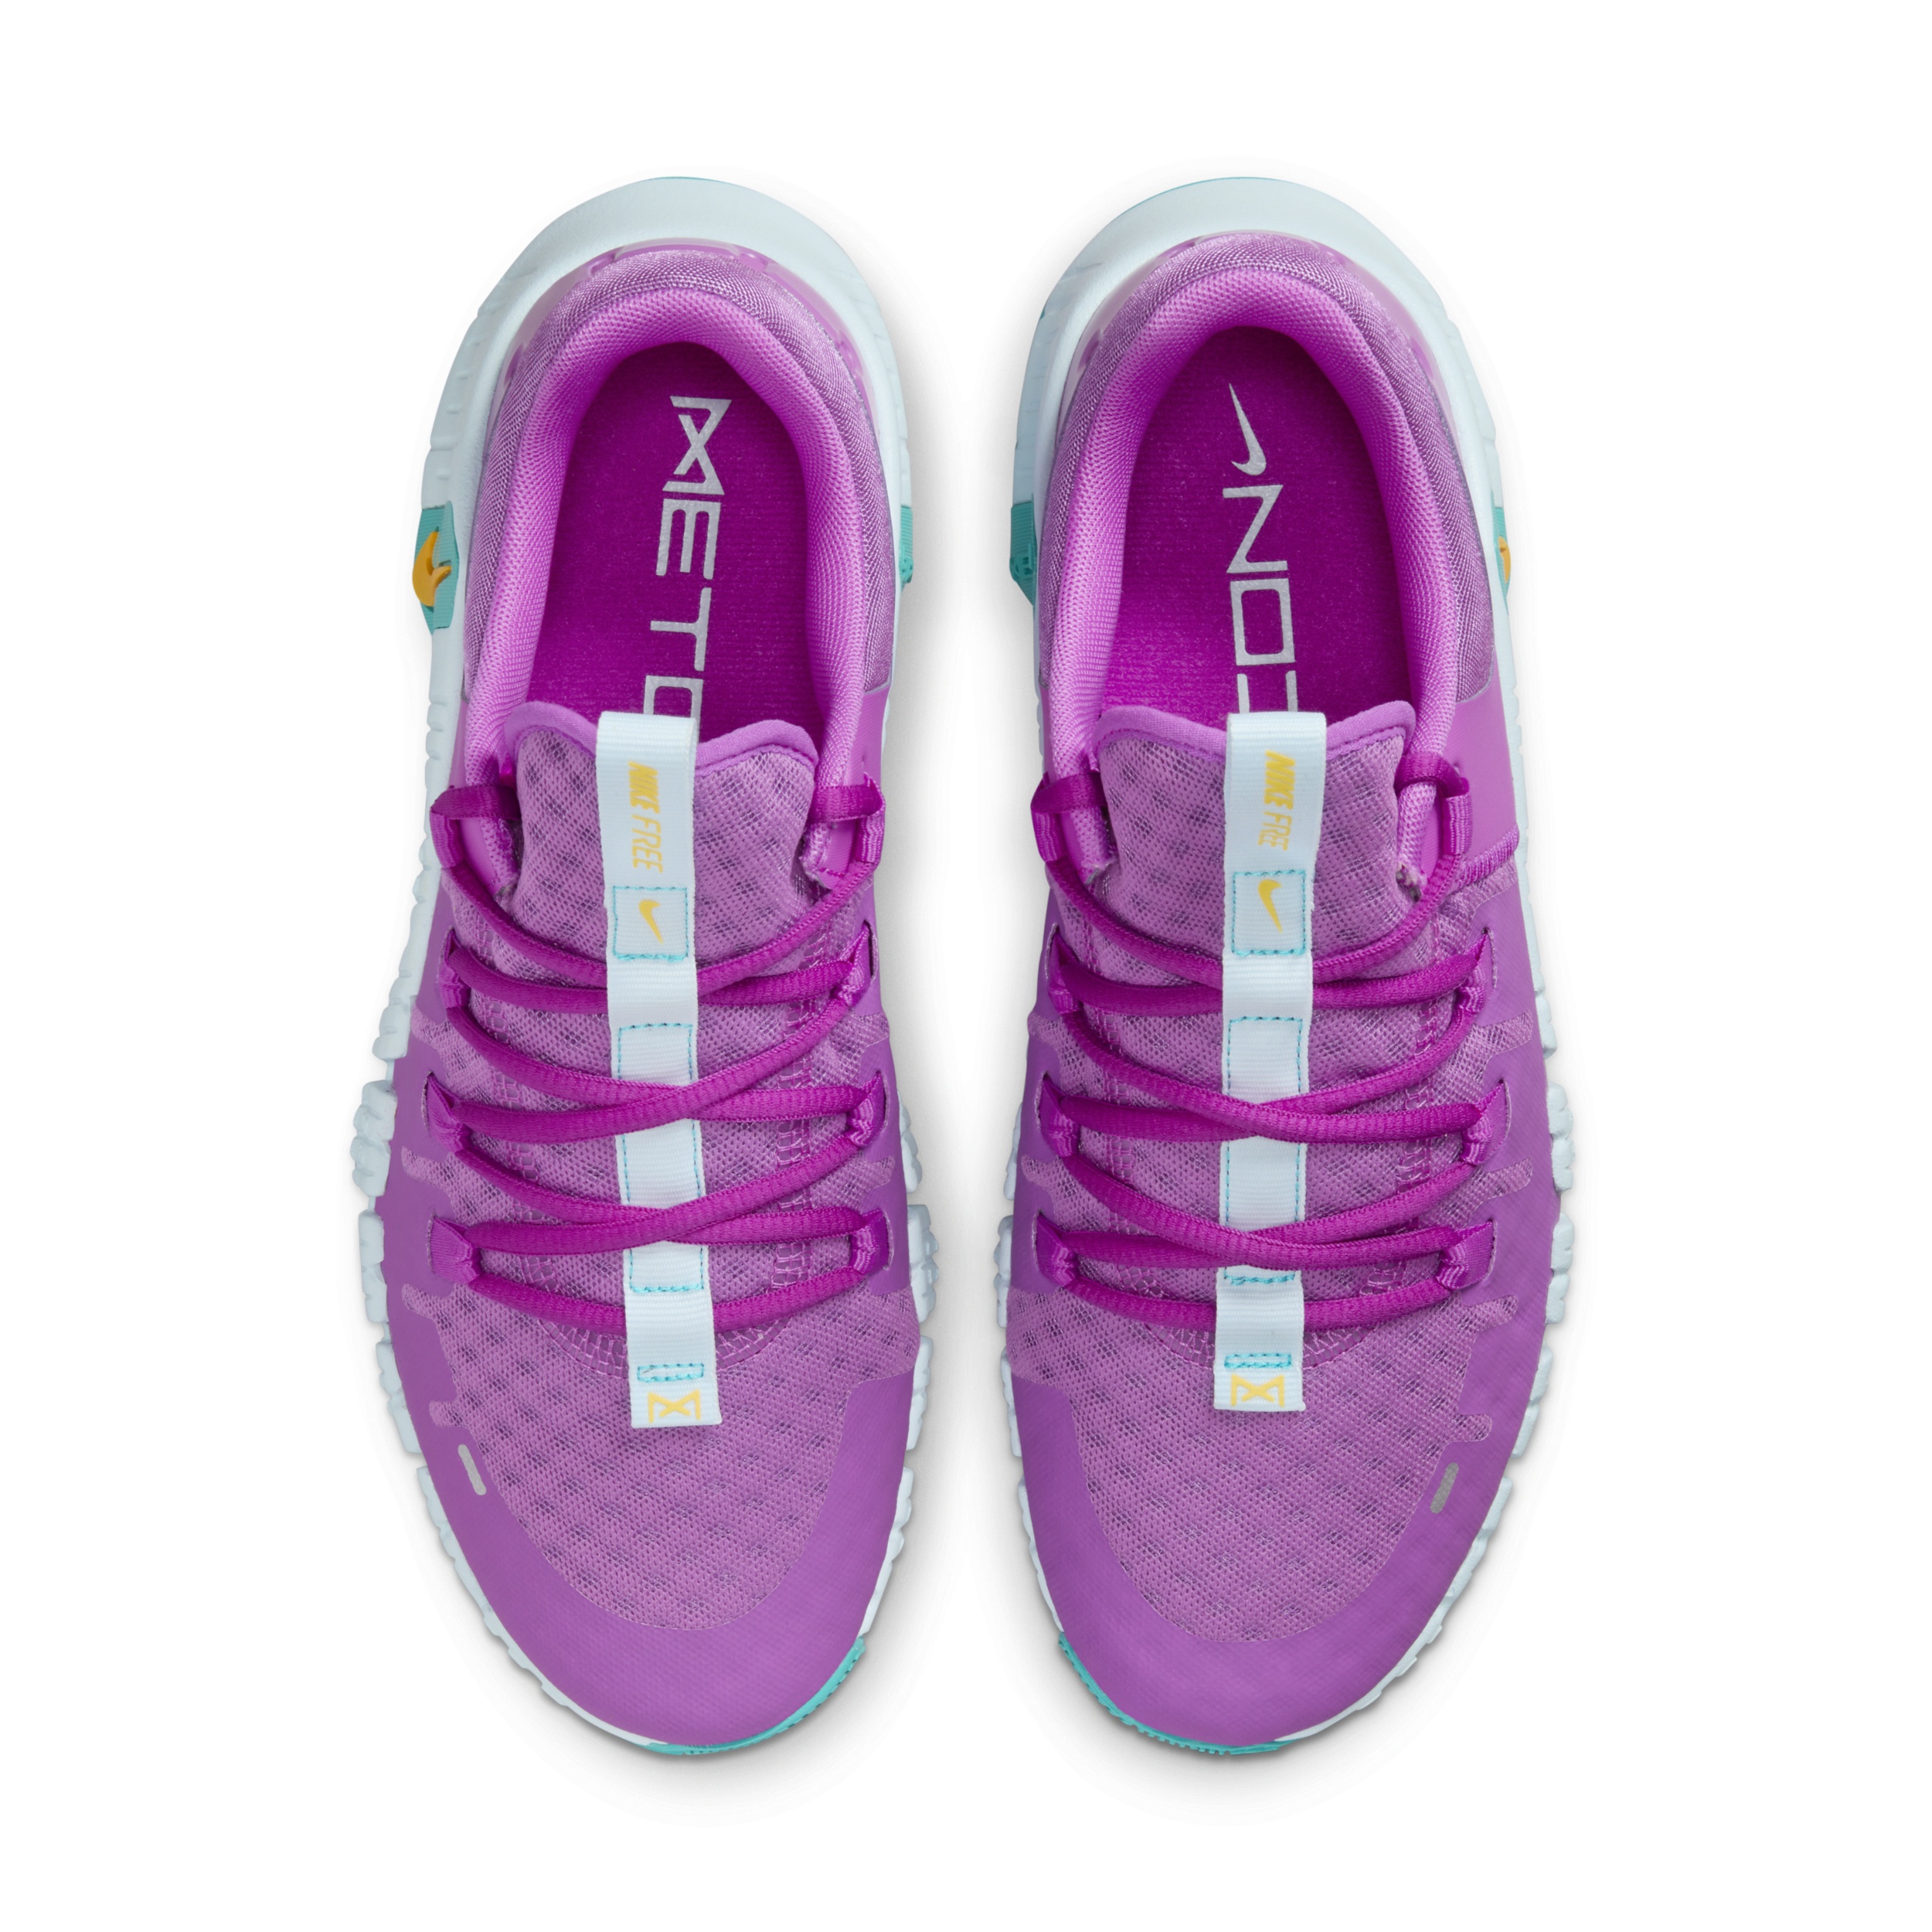 Nike Women's Free Metcon 5 Workout Shoes - 5